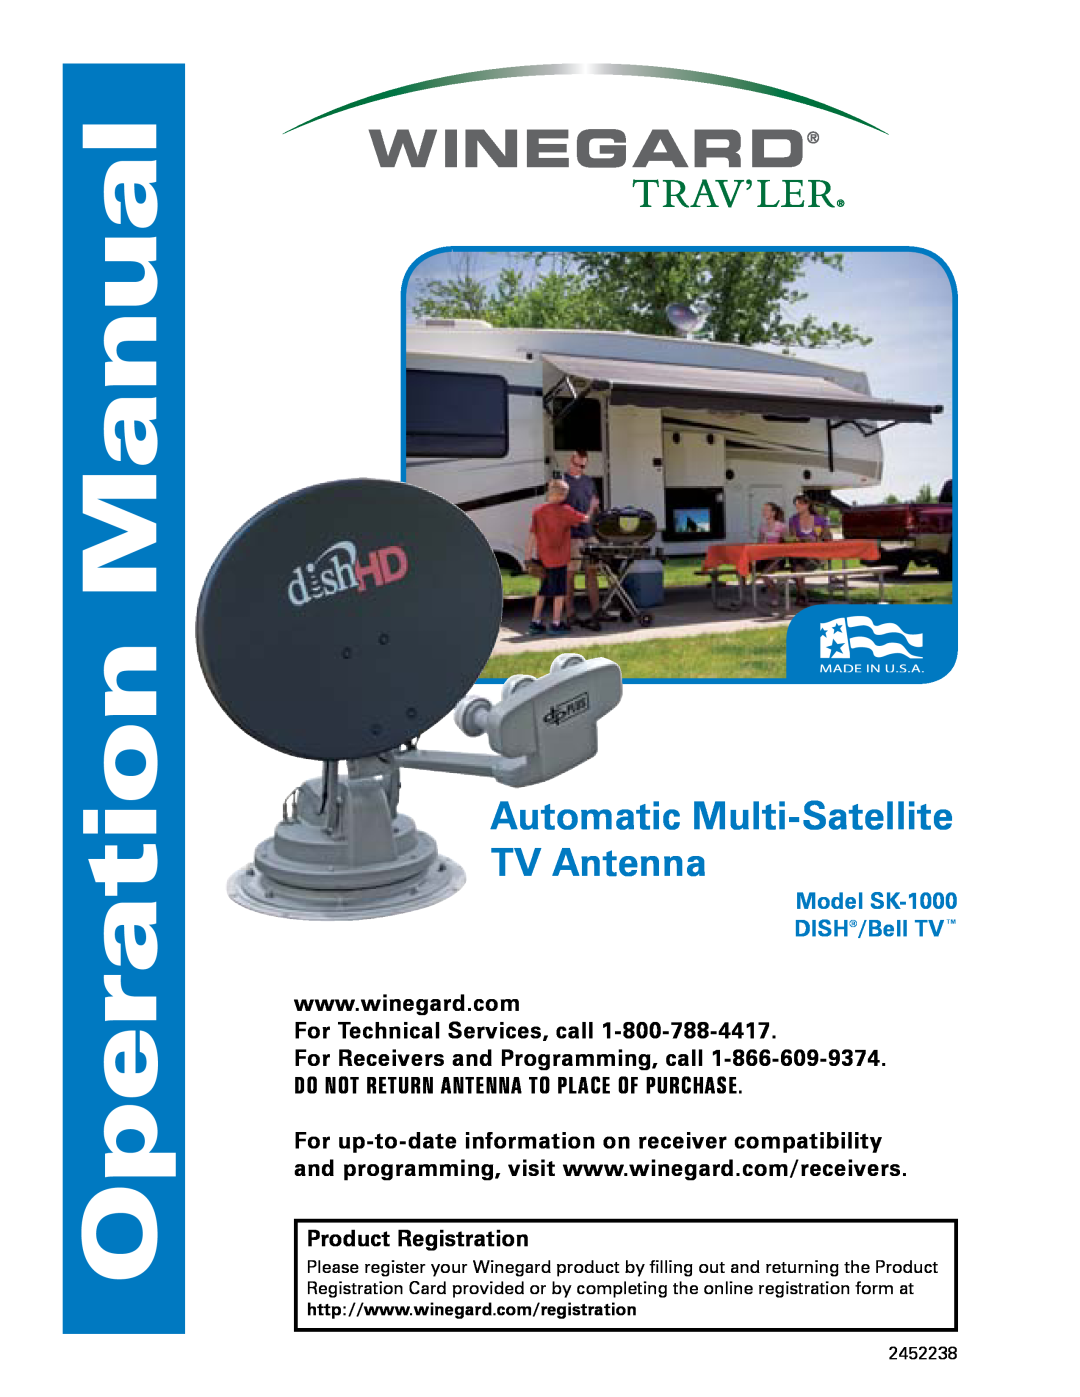 Winegard operation manual Operation Manual, Automatic Multi-Satellite TV Antenna, Model SK-1000 DISH/Bell TV 